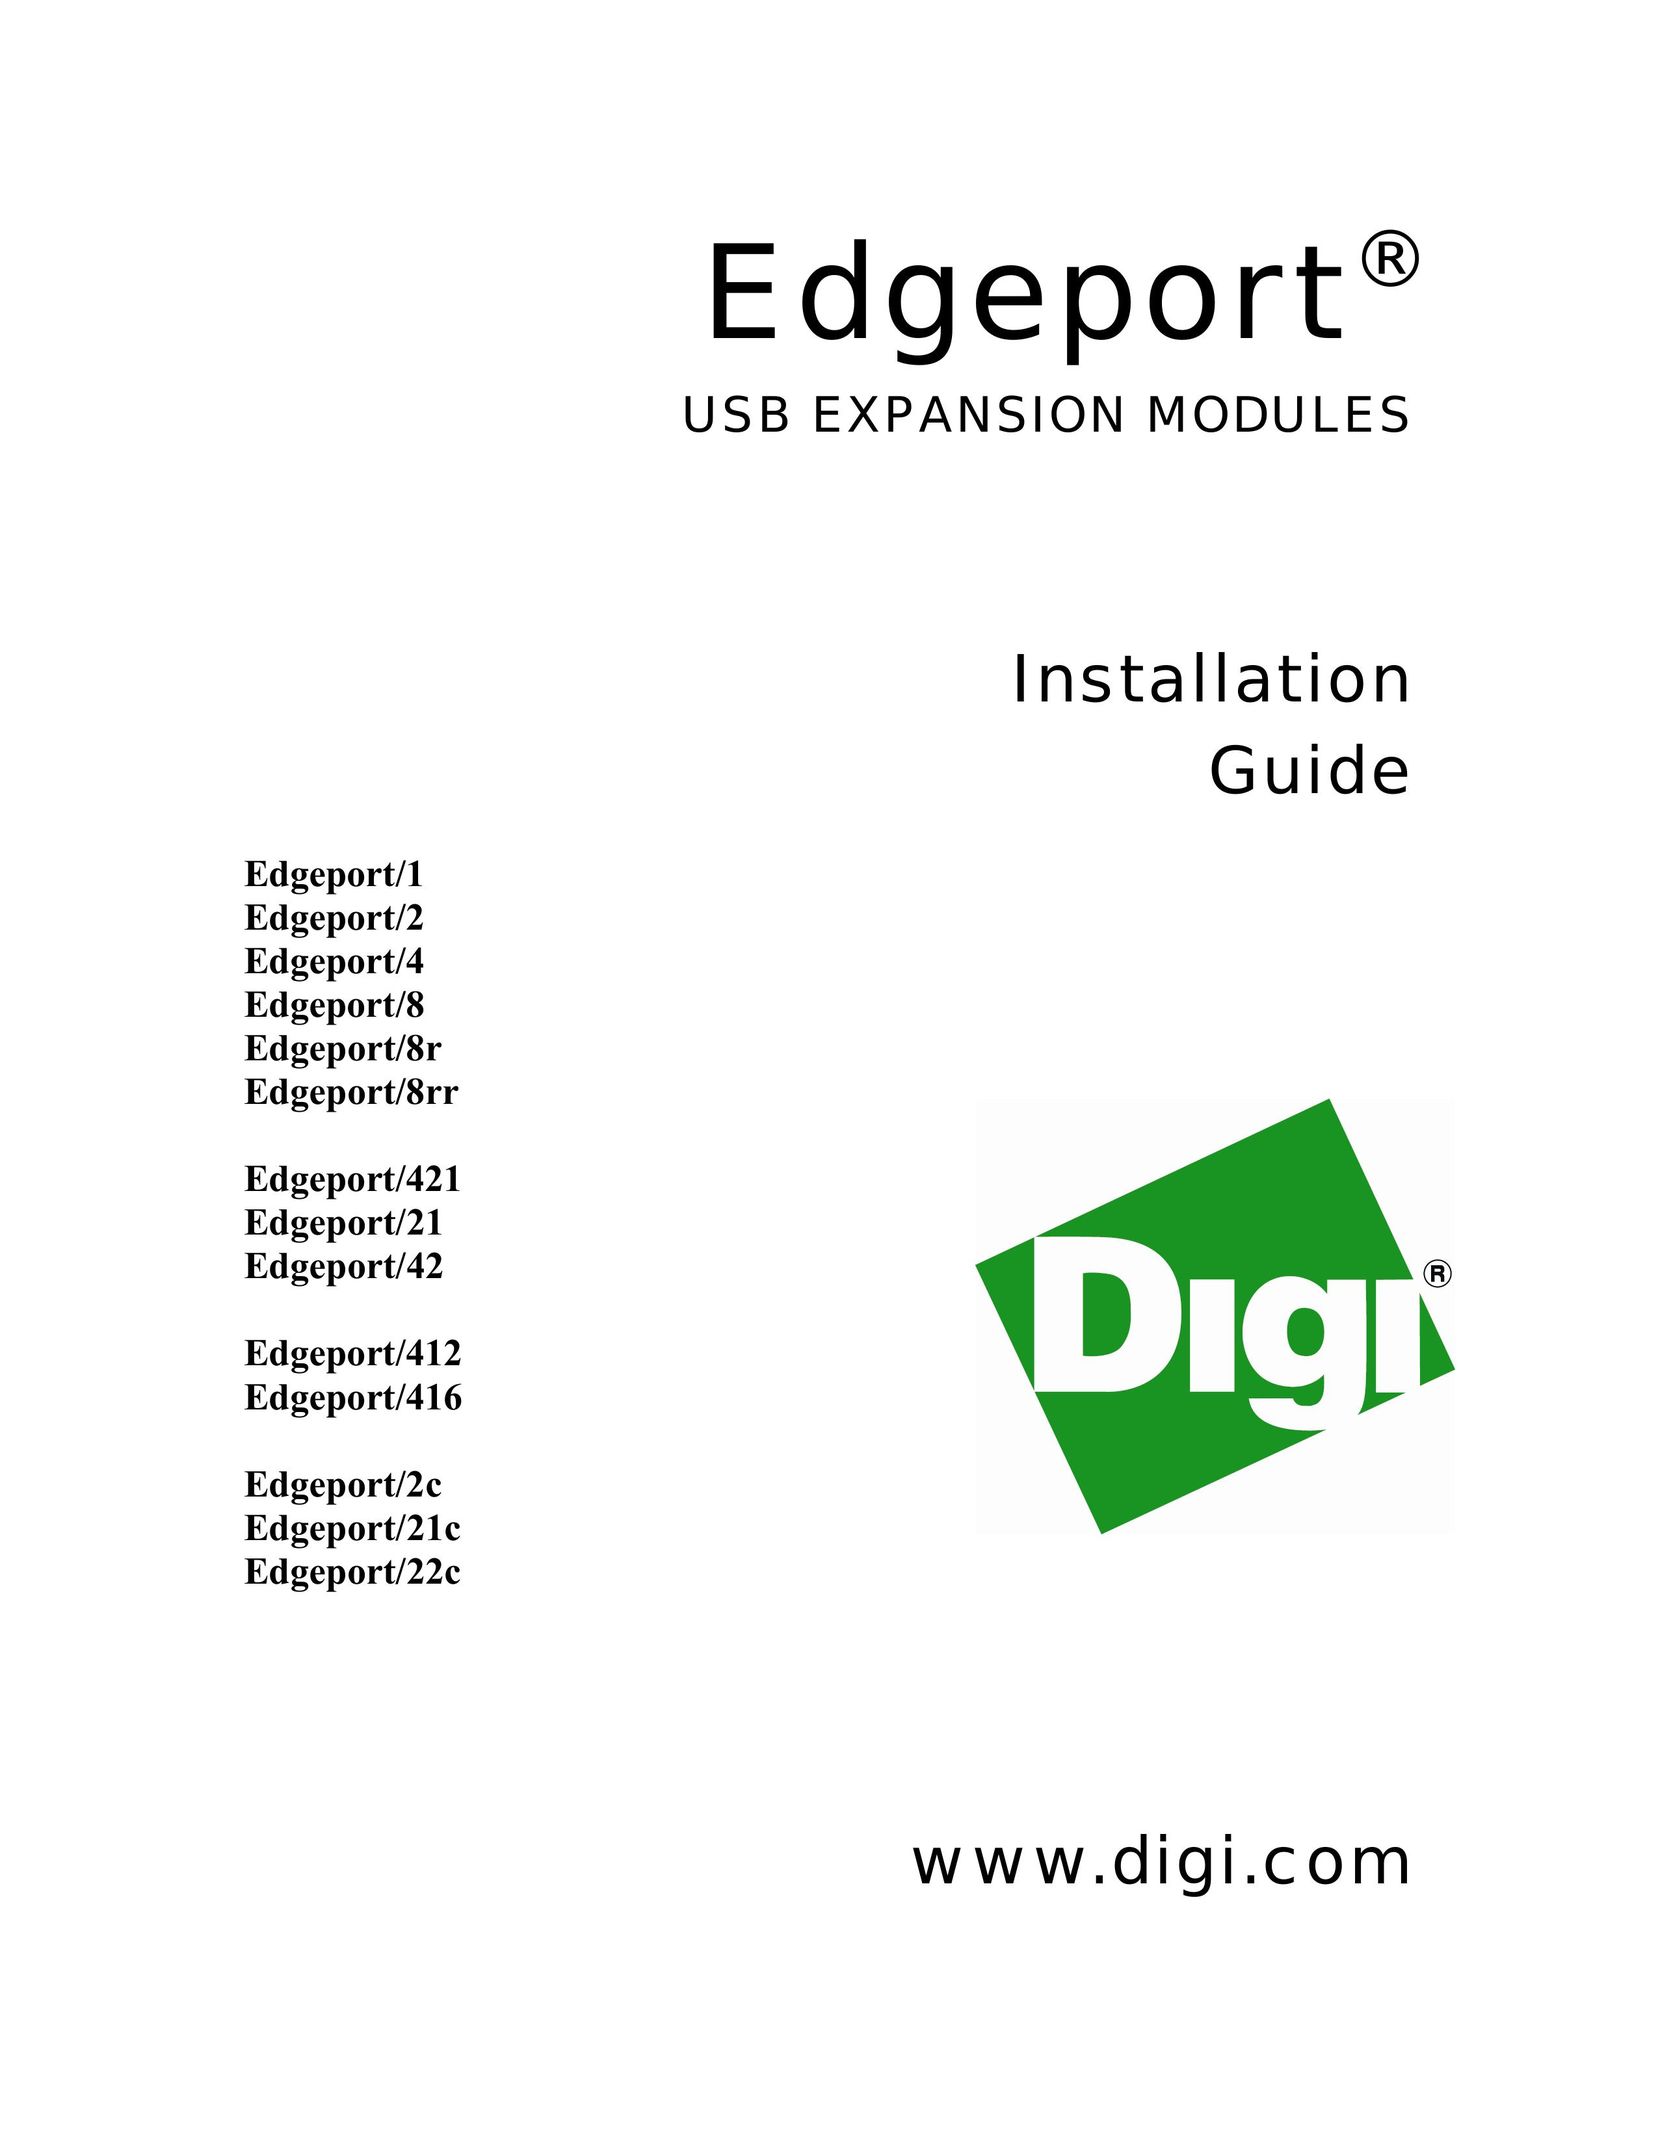 Digi Edgeport/412 Network Card User Manual